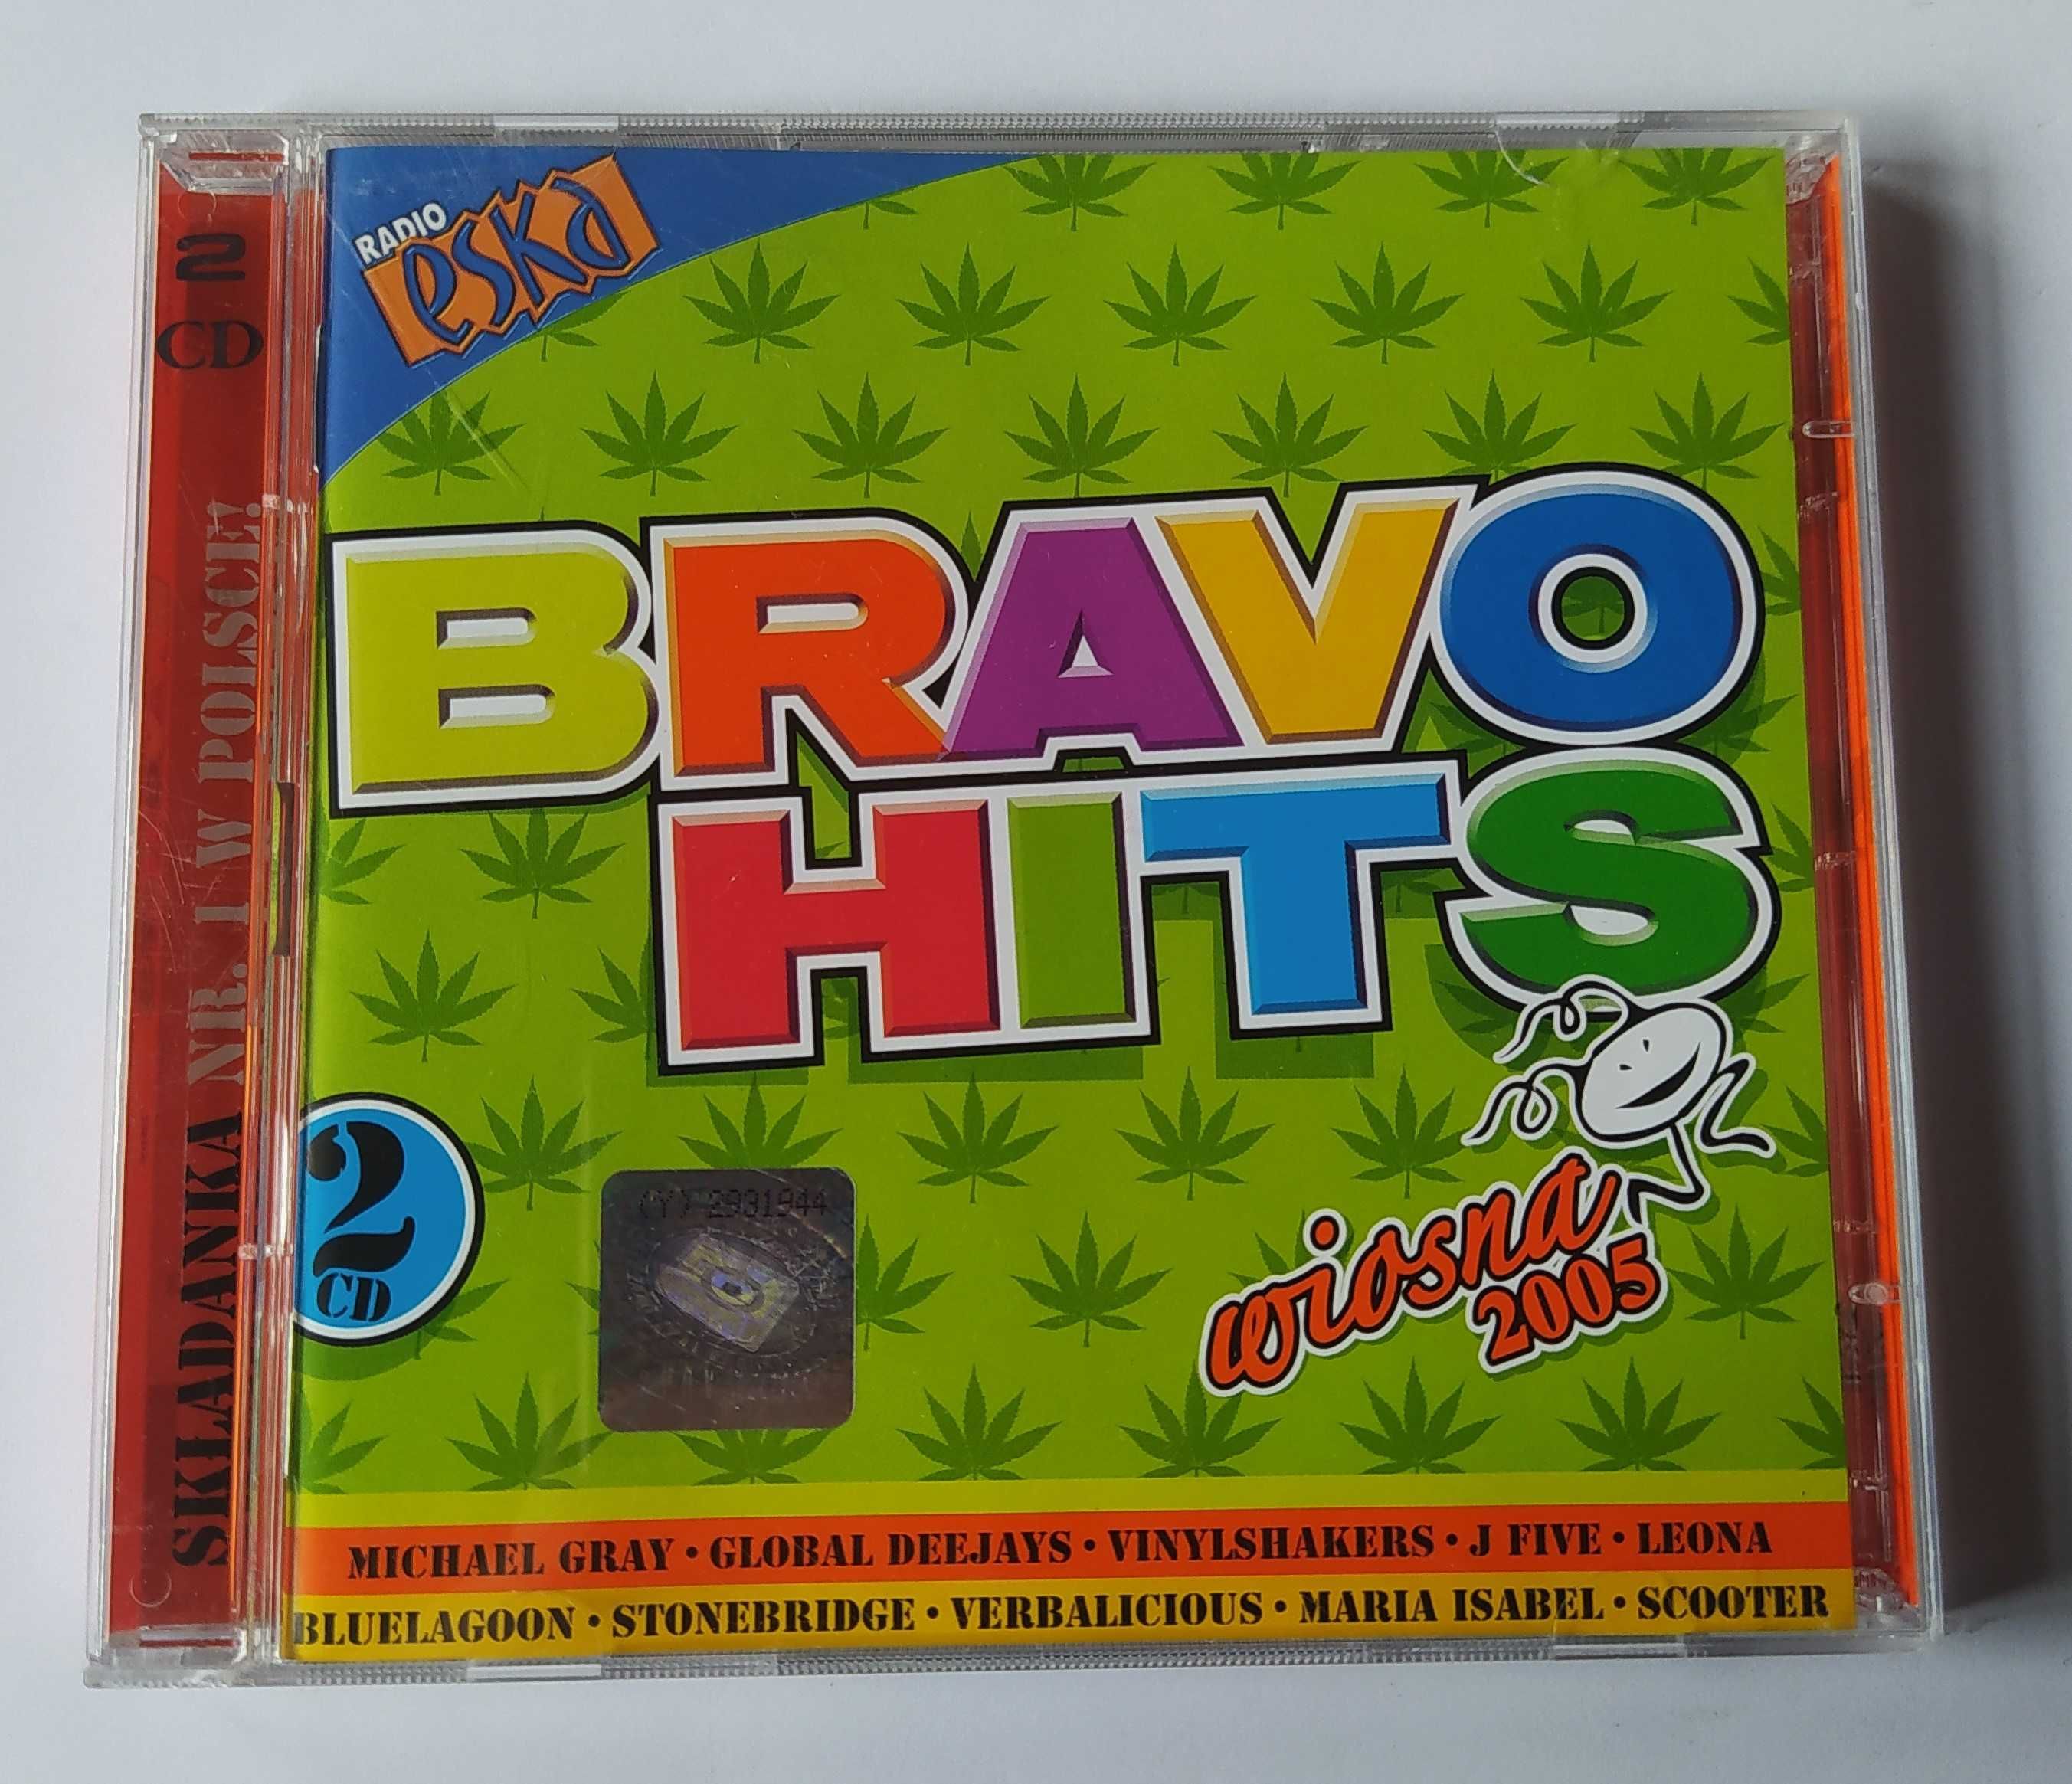 Bravo Hits Wiosna 2005 - 2 CD